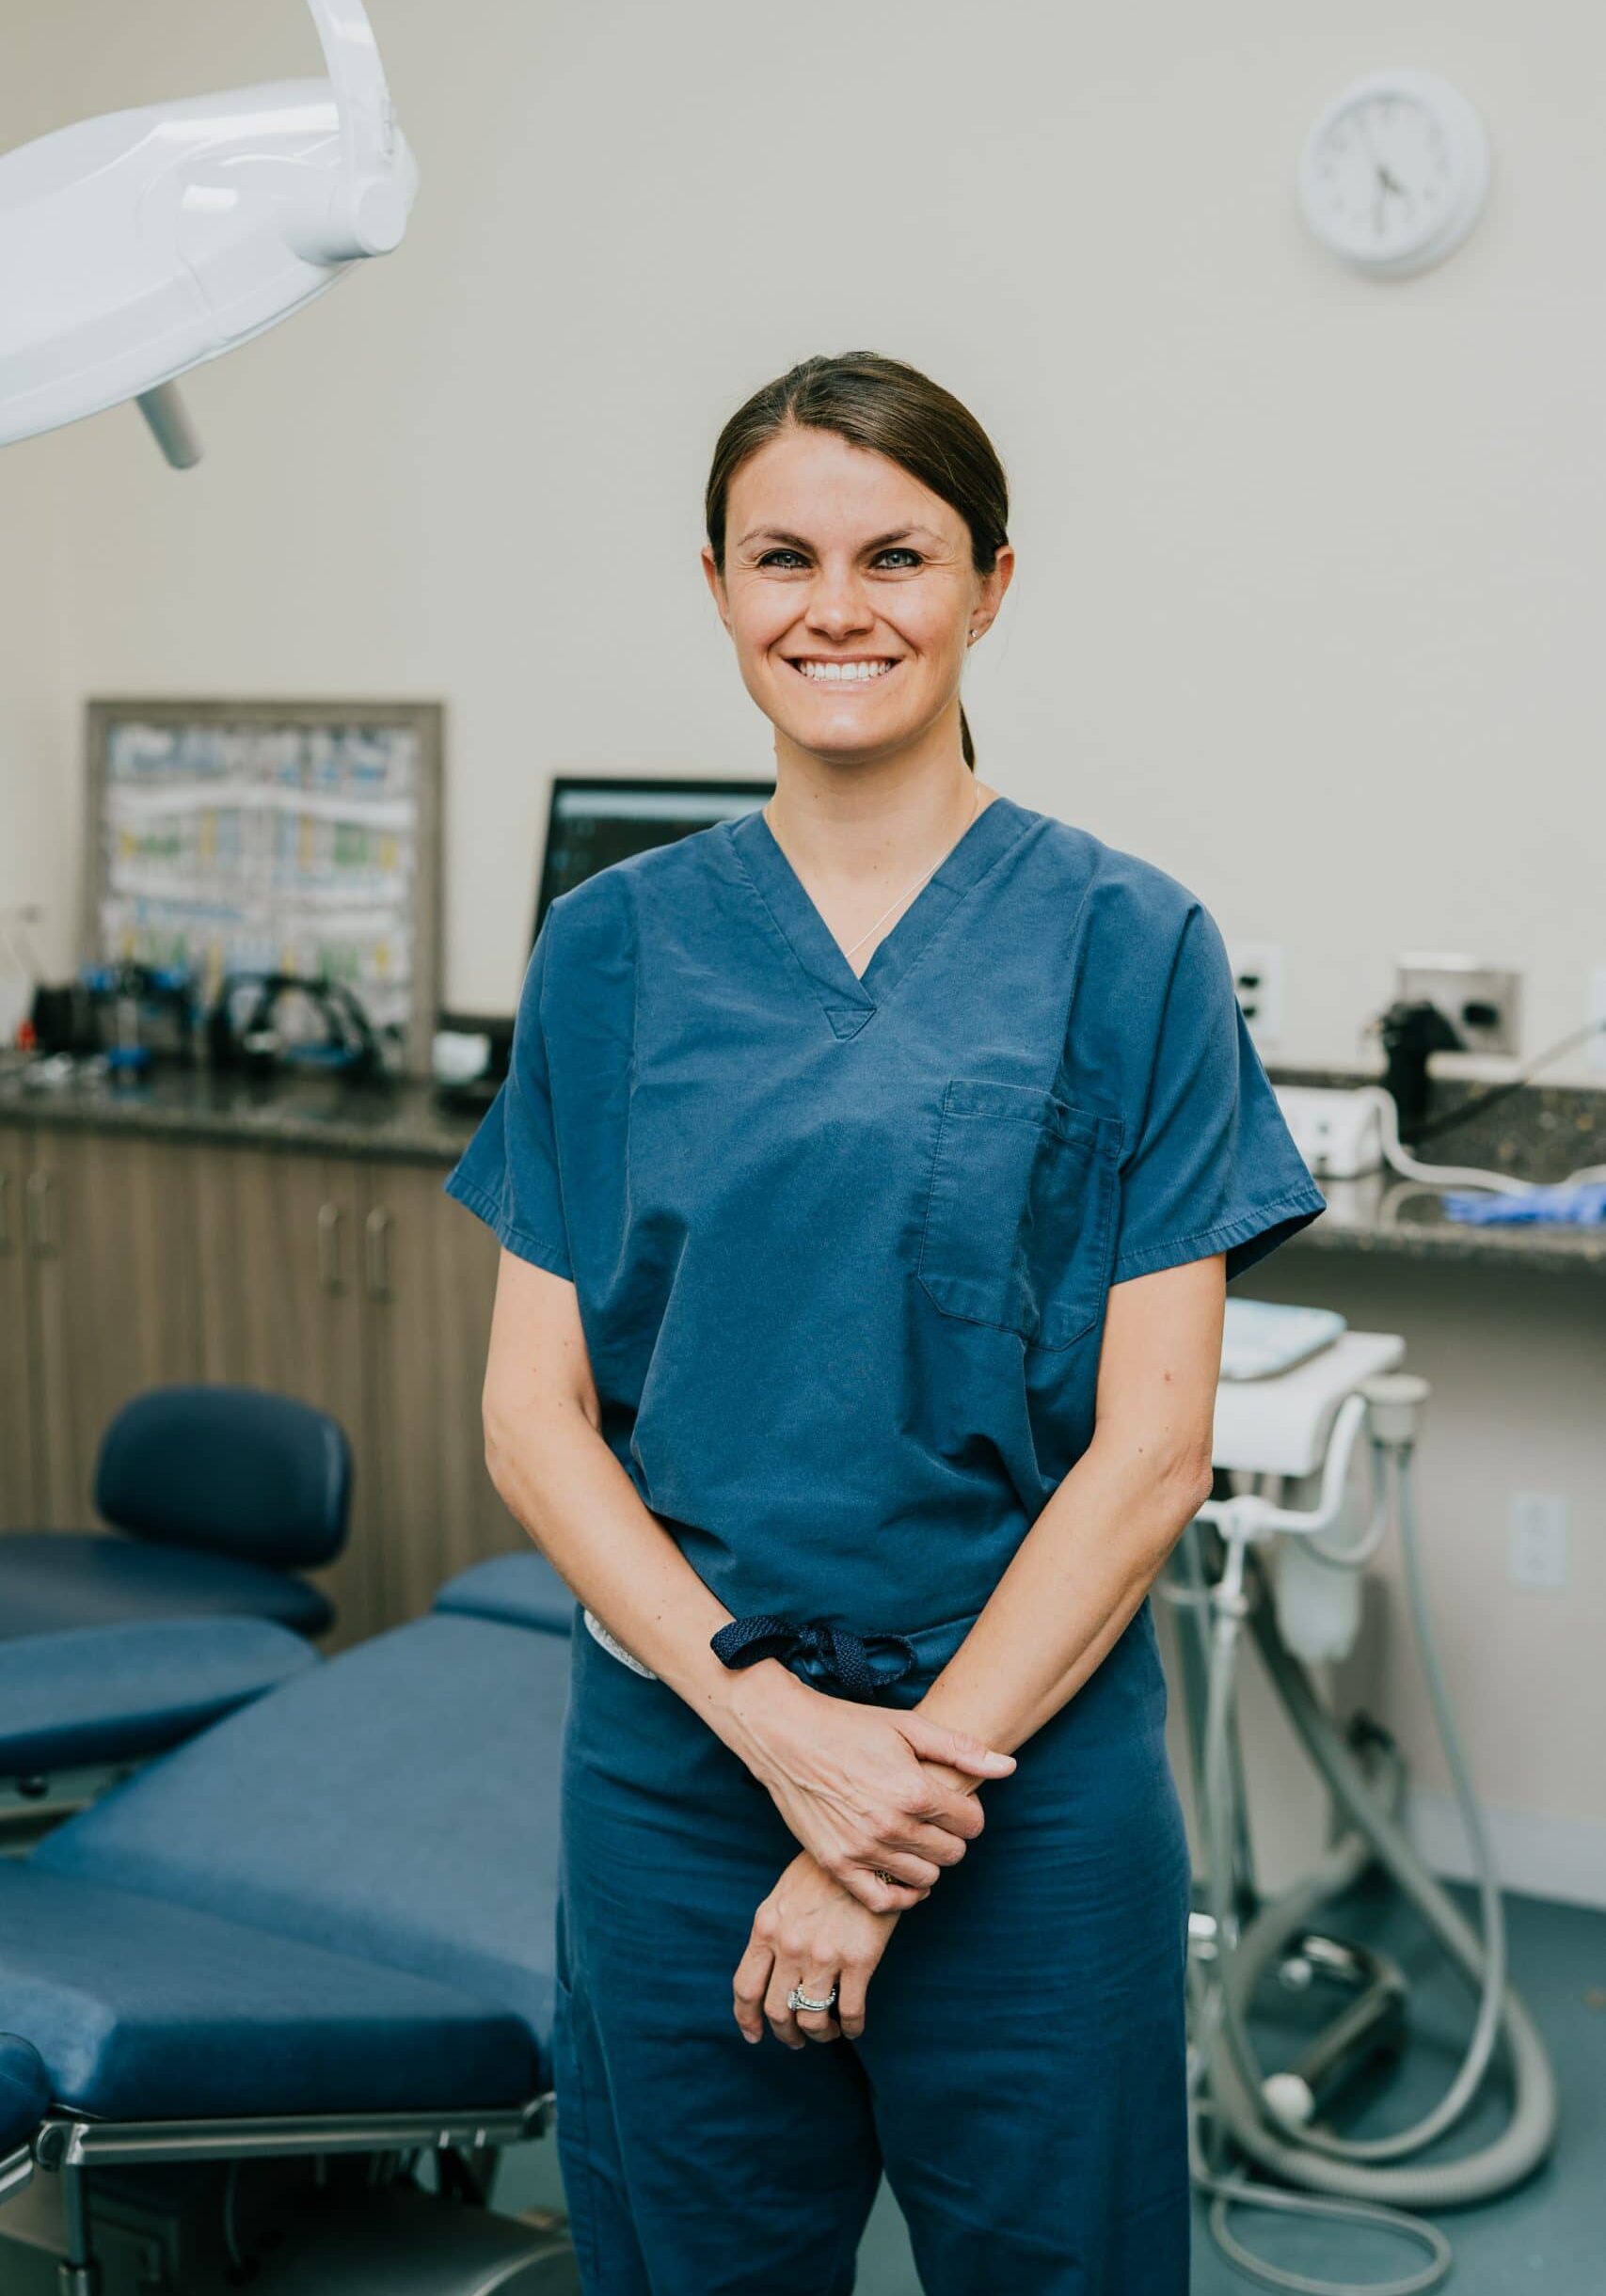 Dr. Lindsey Pikos Rosati
<br/>
<br/>
Coastal Jaw Surgery